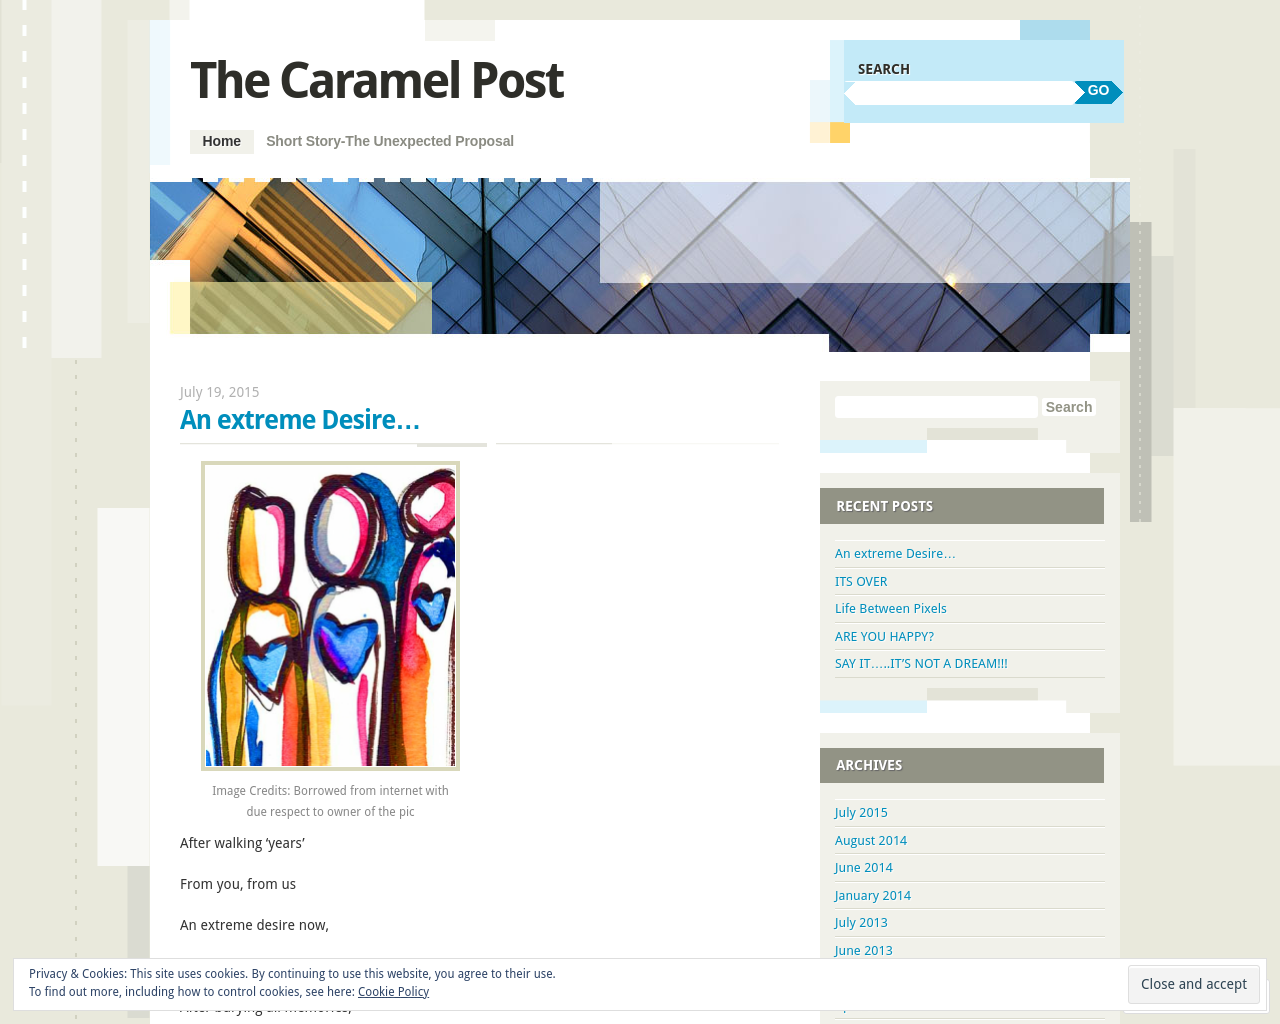 The Caramel Post